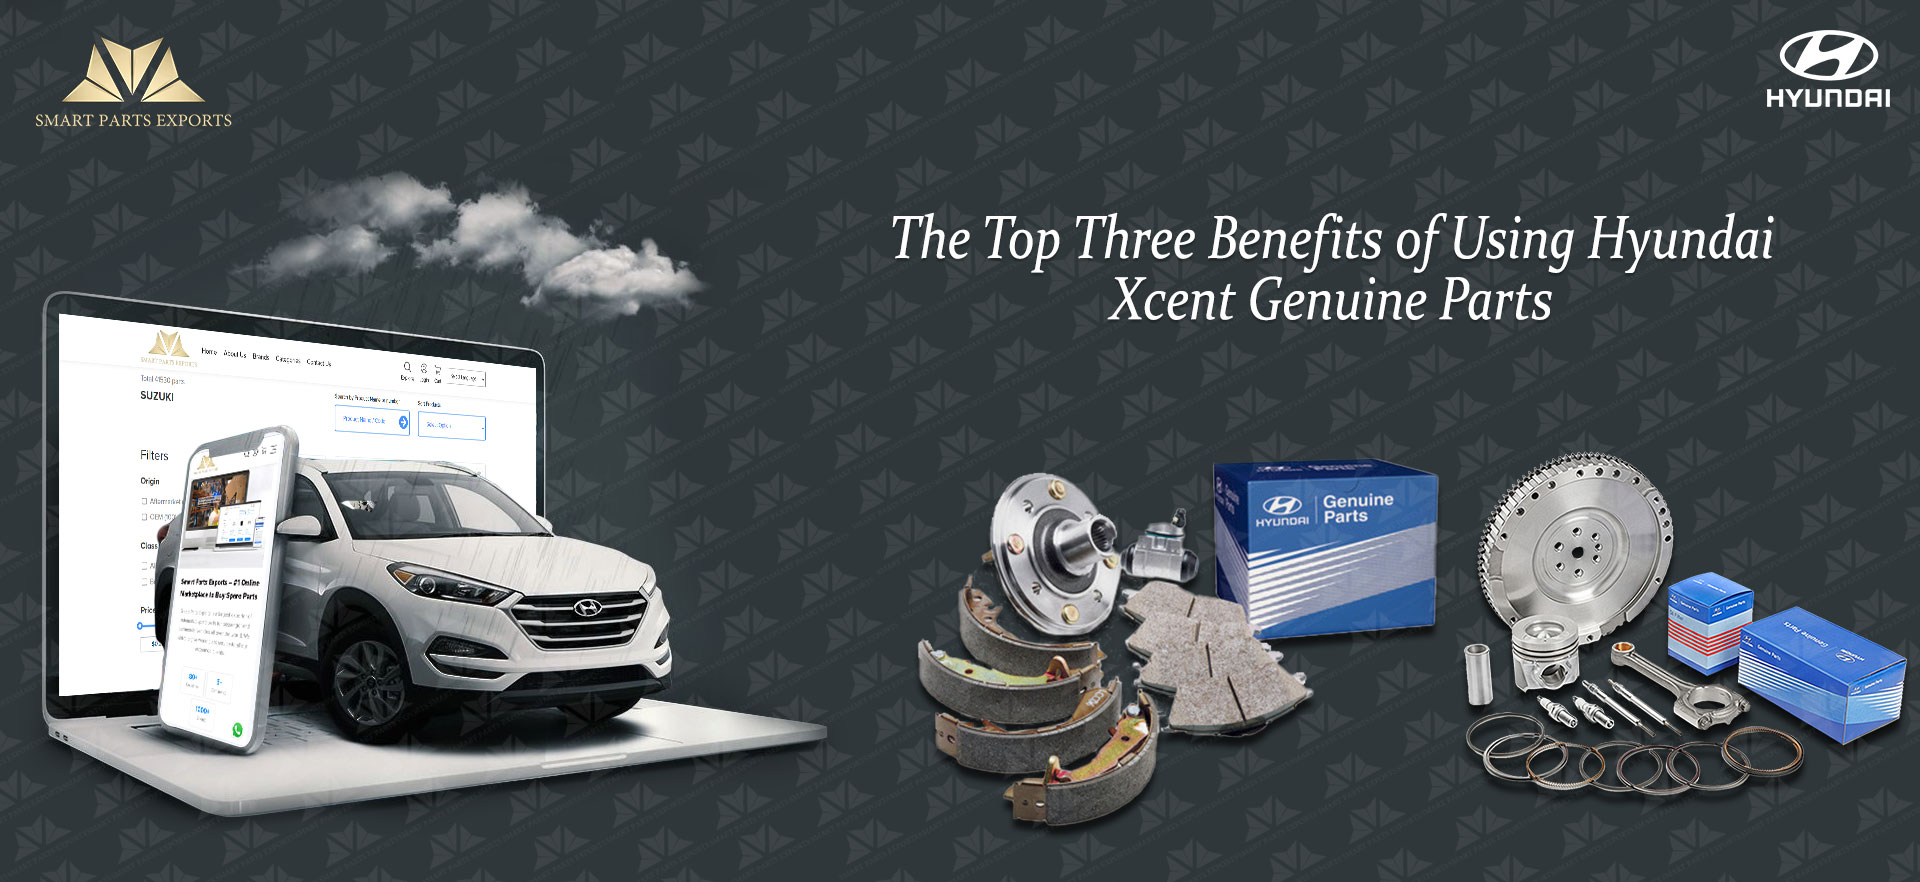 The Top Three Benefits of Choosing Hyundai Xcent Genuine Parts